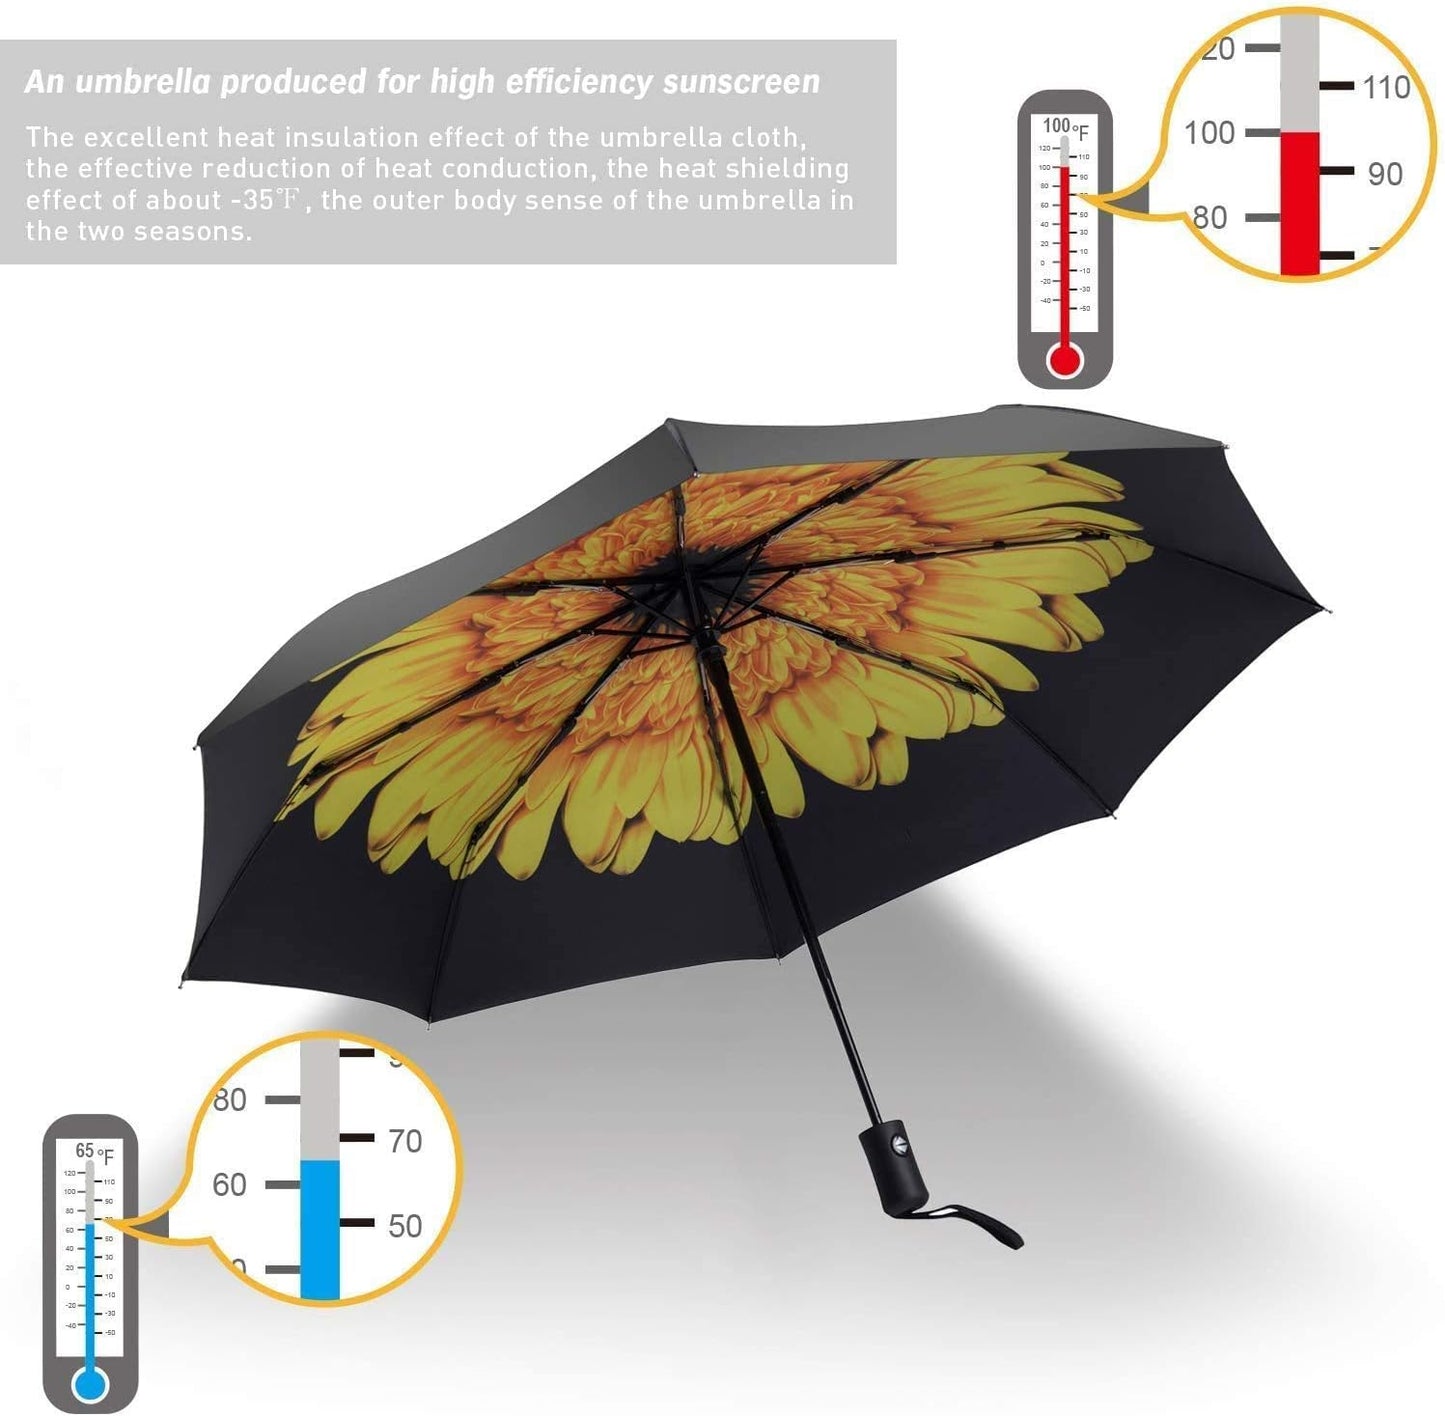 THE SY COMPACT Travel Umbrella Windproof Automatic Umbrellas-Factory Outlet umbrella